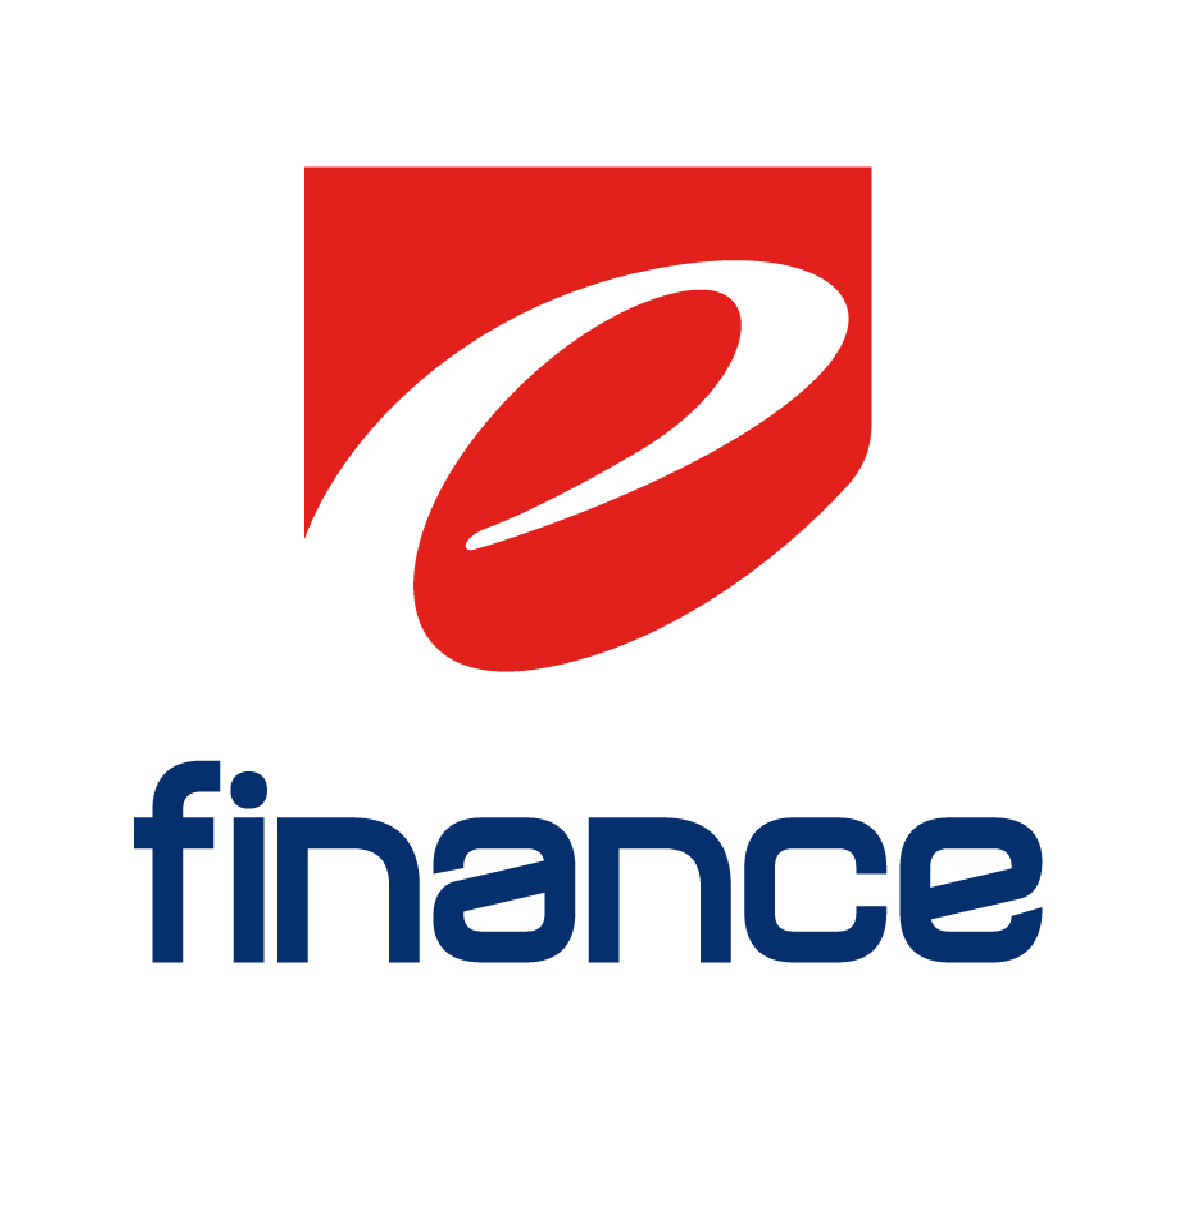 e-finance